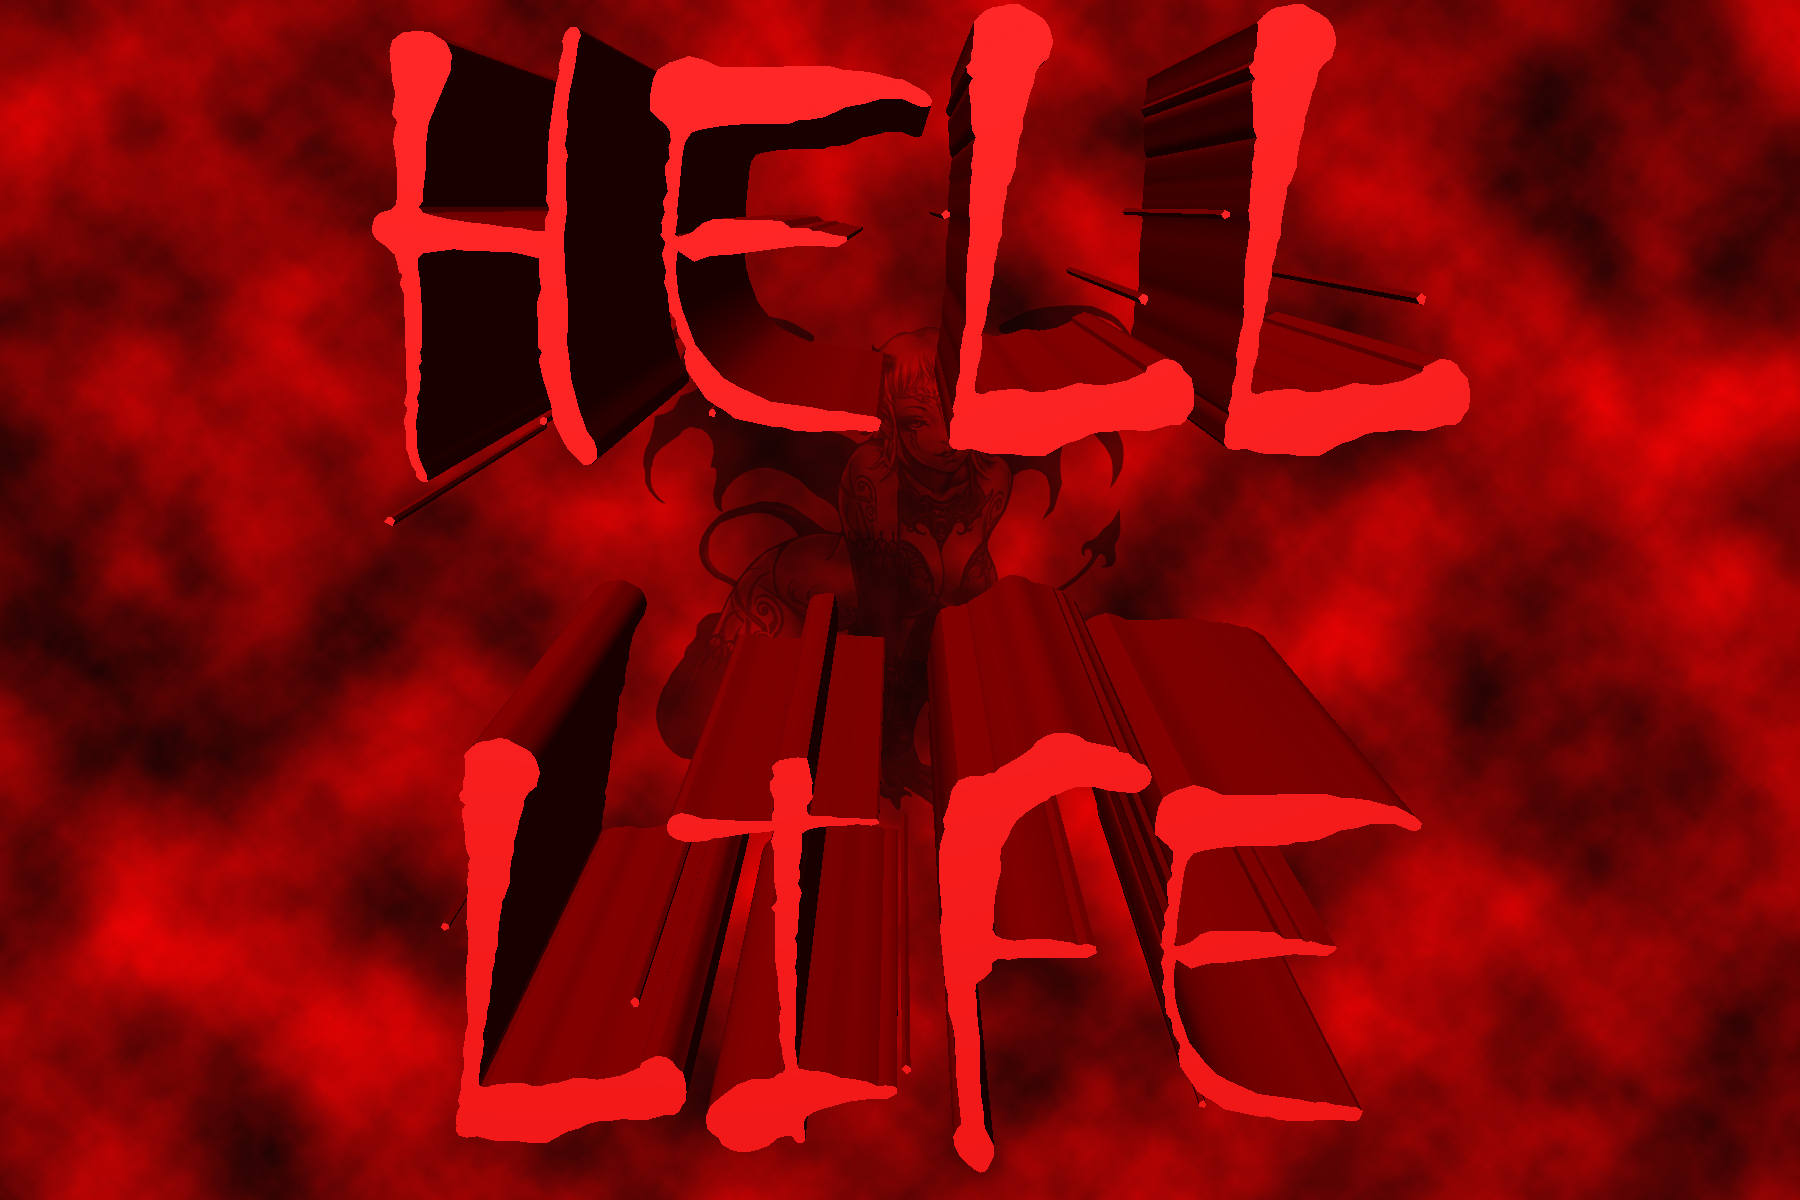 Hell Life